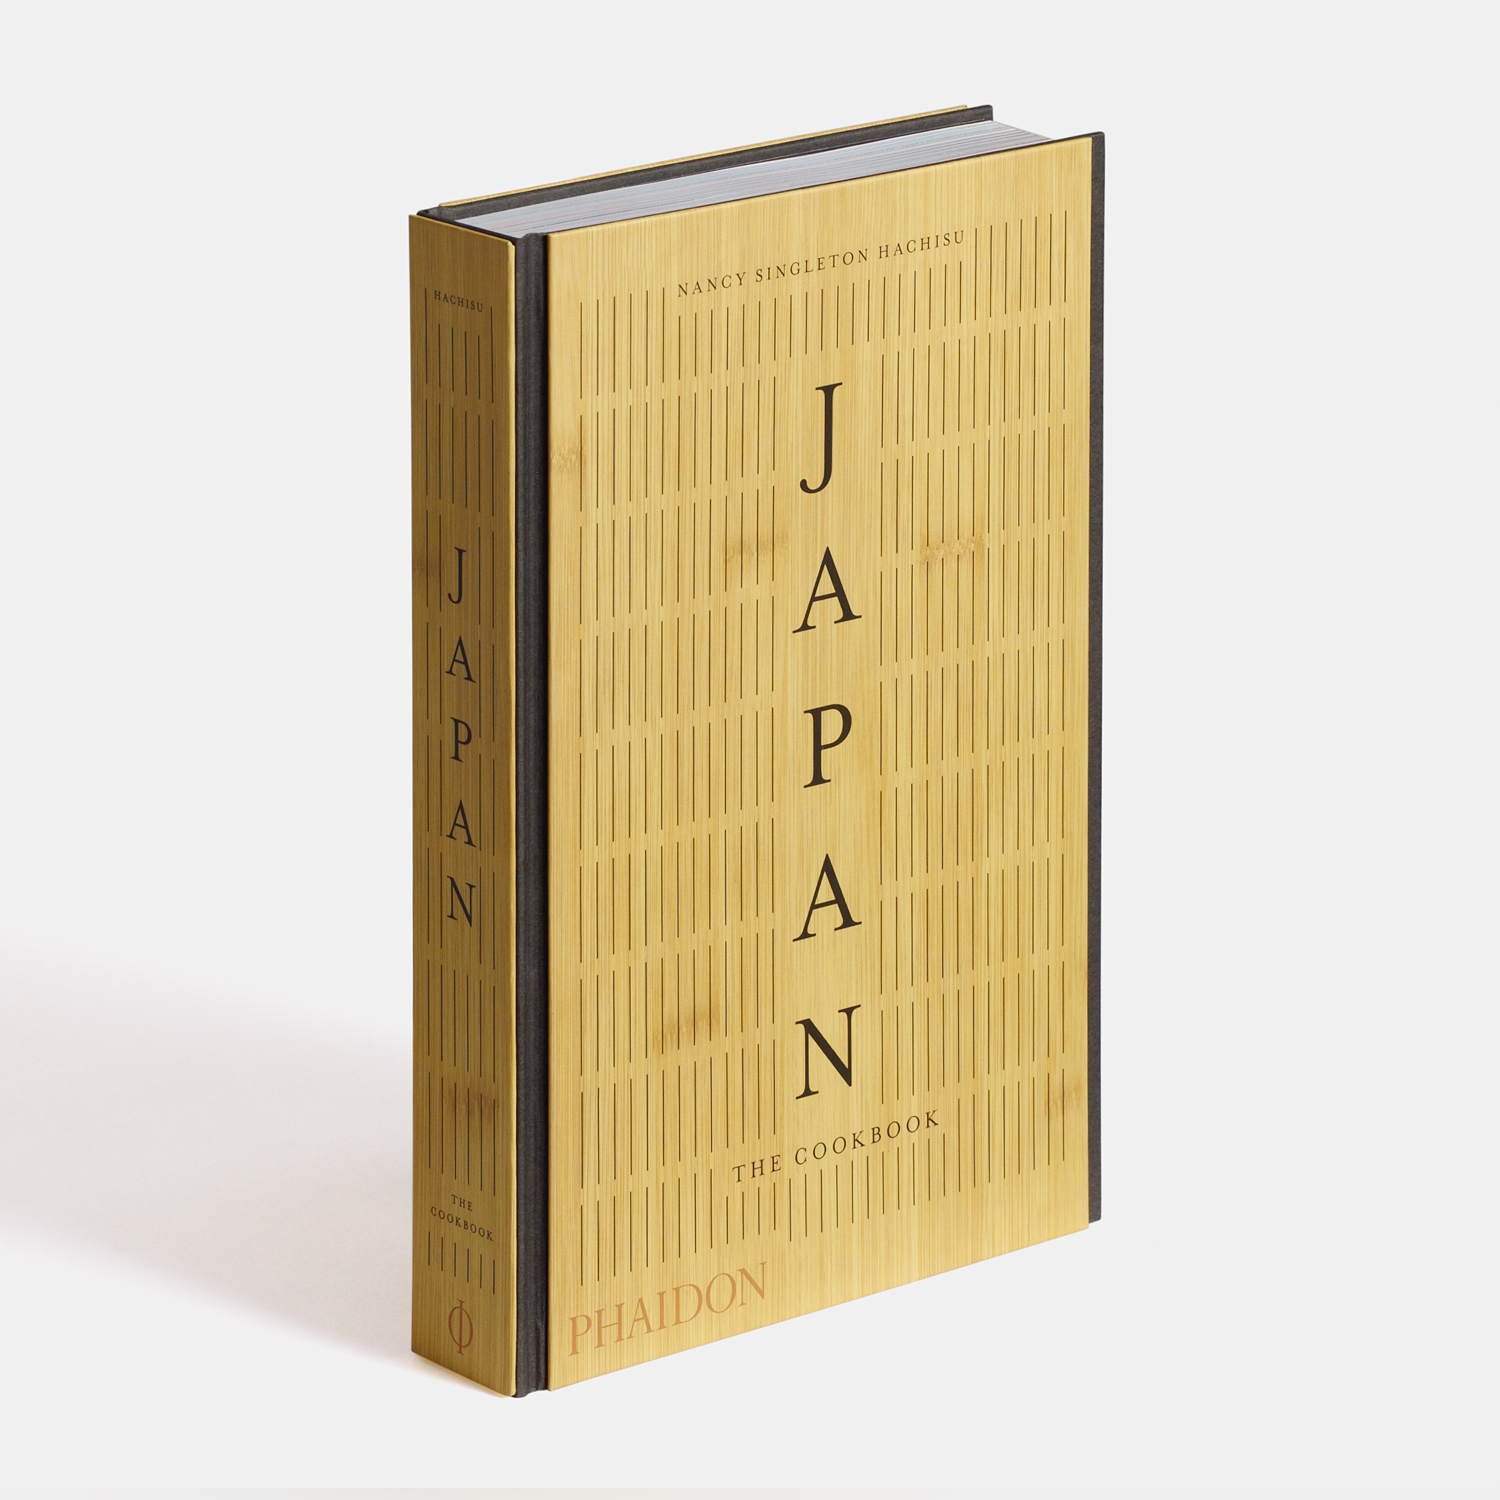 Japan The Cookbook by Nancy Singleton Hachisu